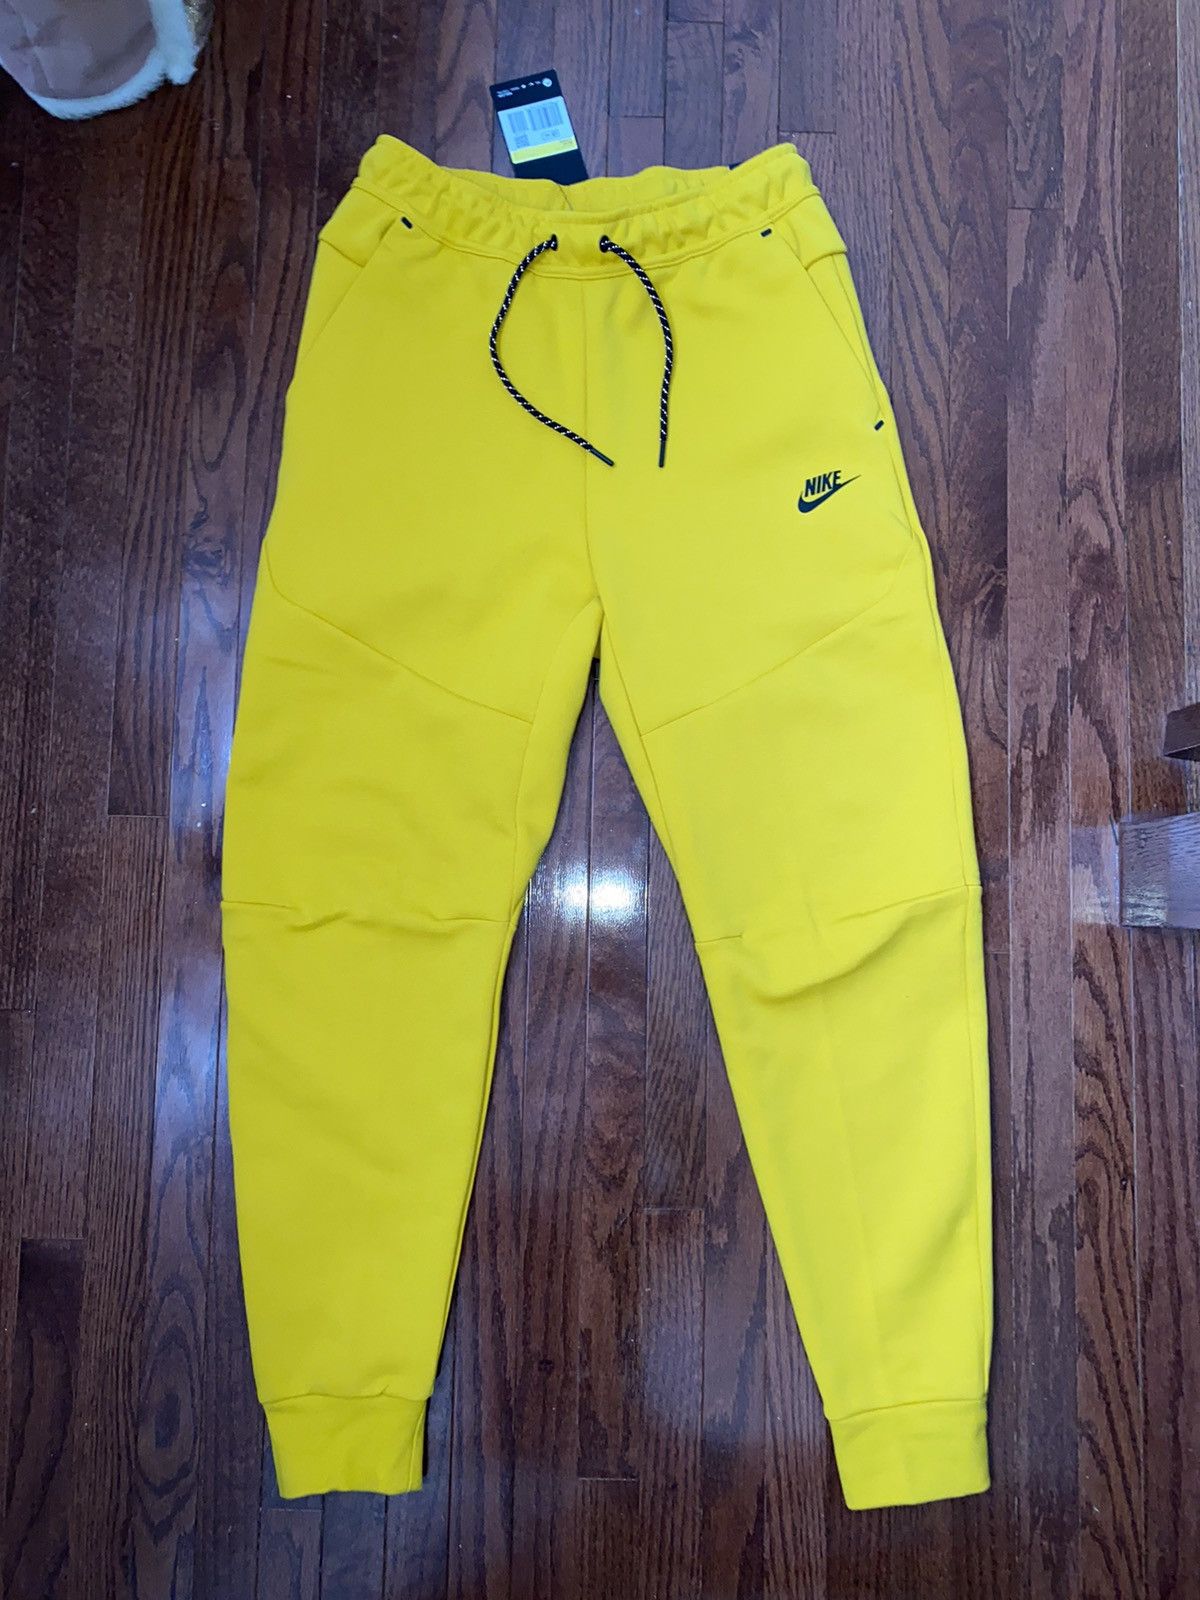 Nike New Nike Tech Fleece Pants Yellow Size US 30 / EU 46 - 3 Preview